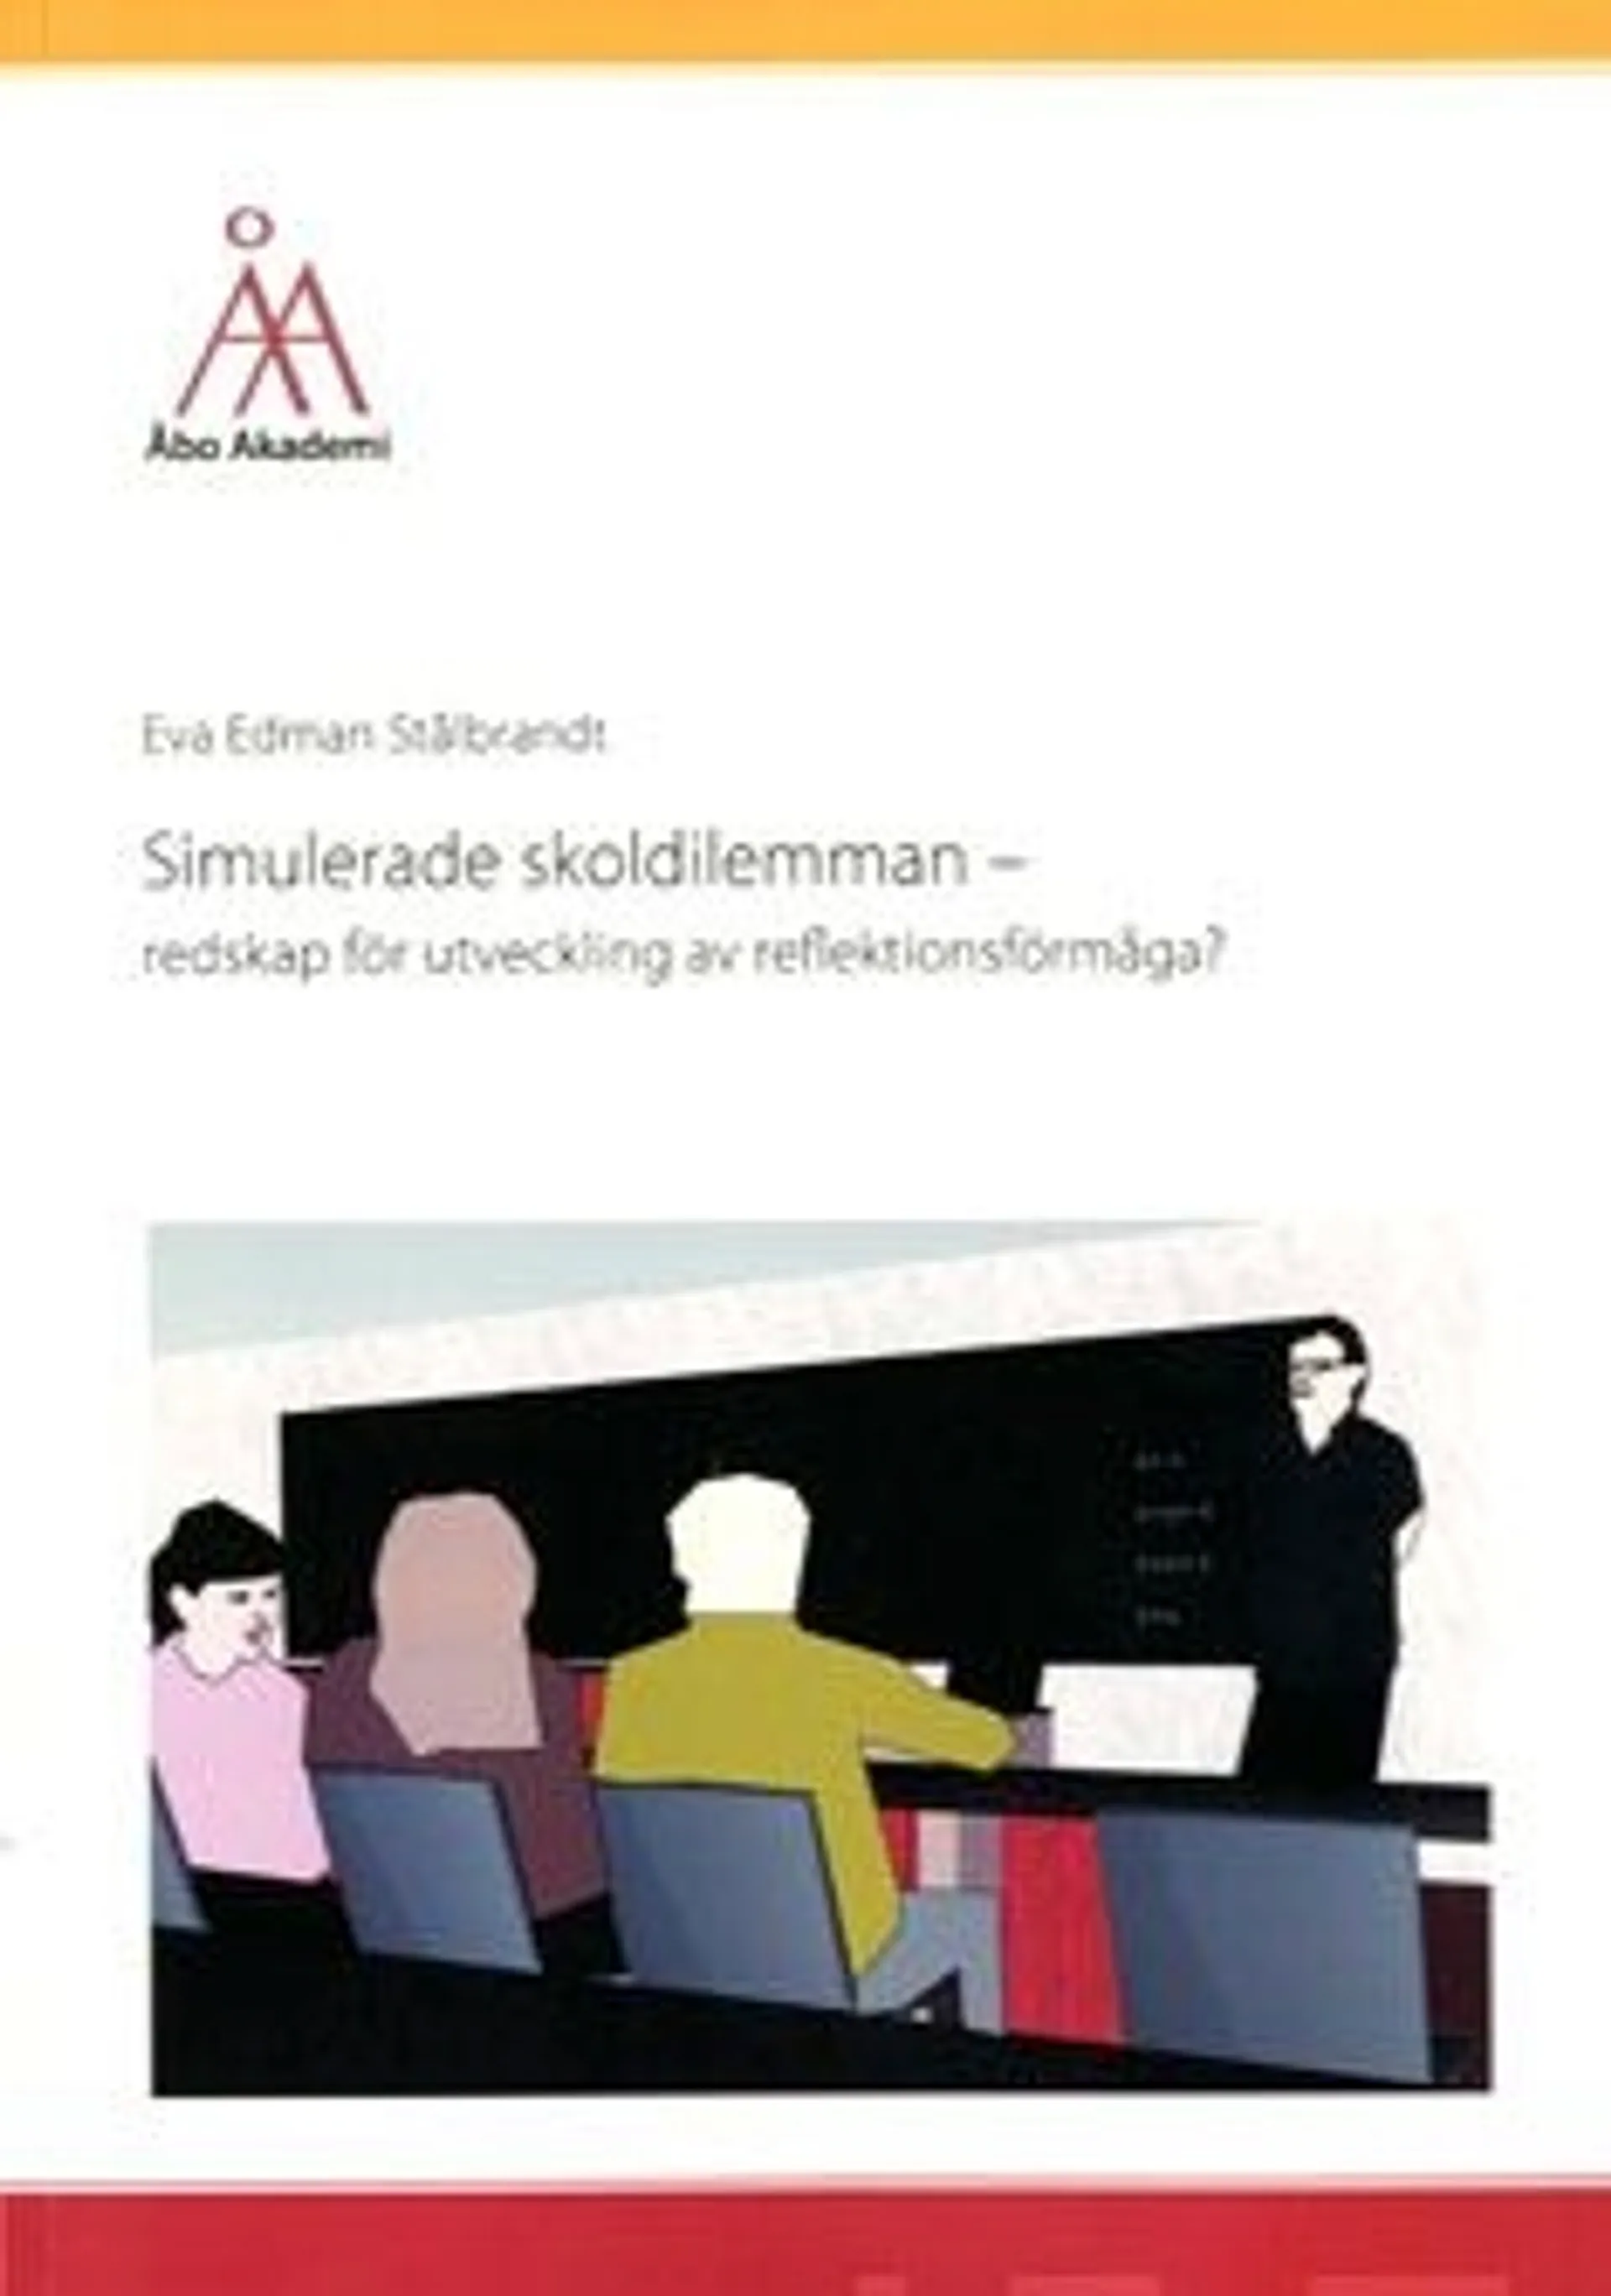 Edman Stålbrandt, Simulerade skoldilemman